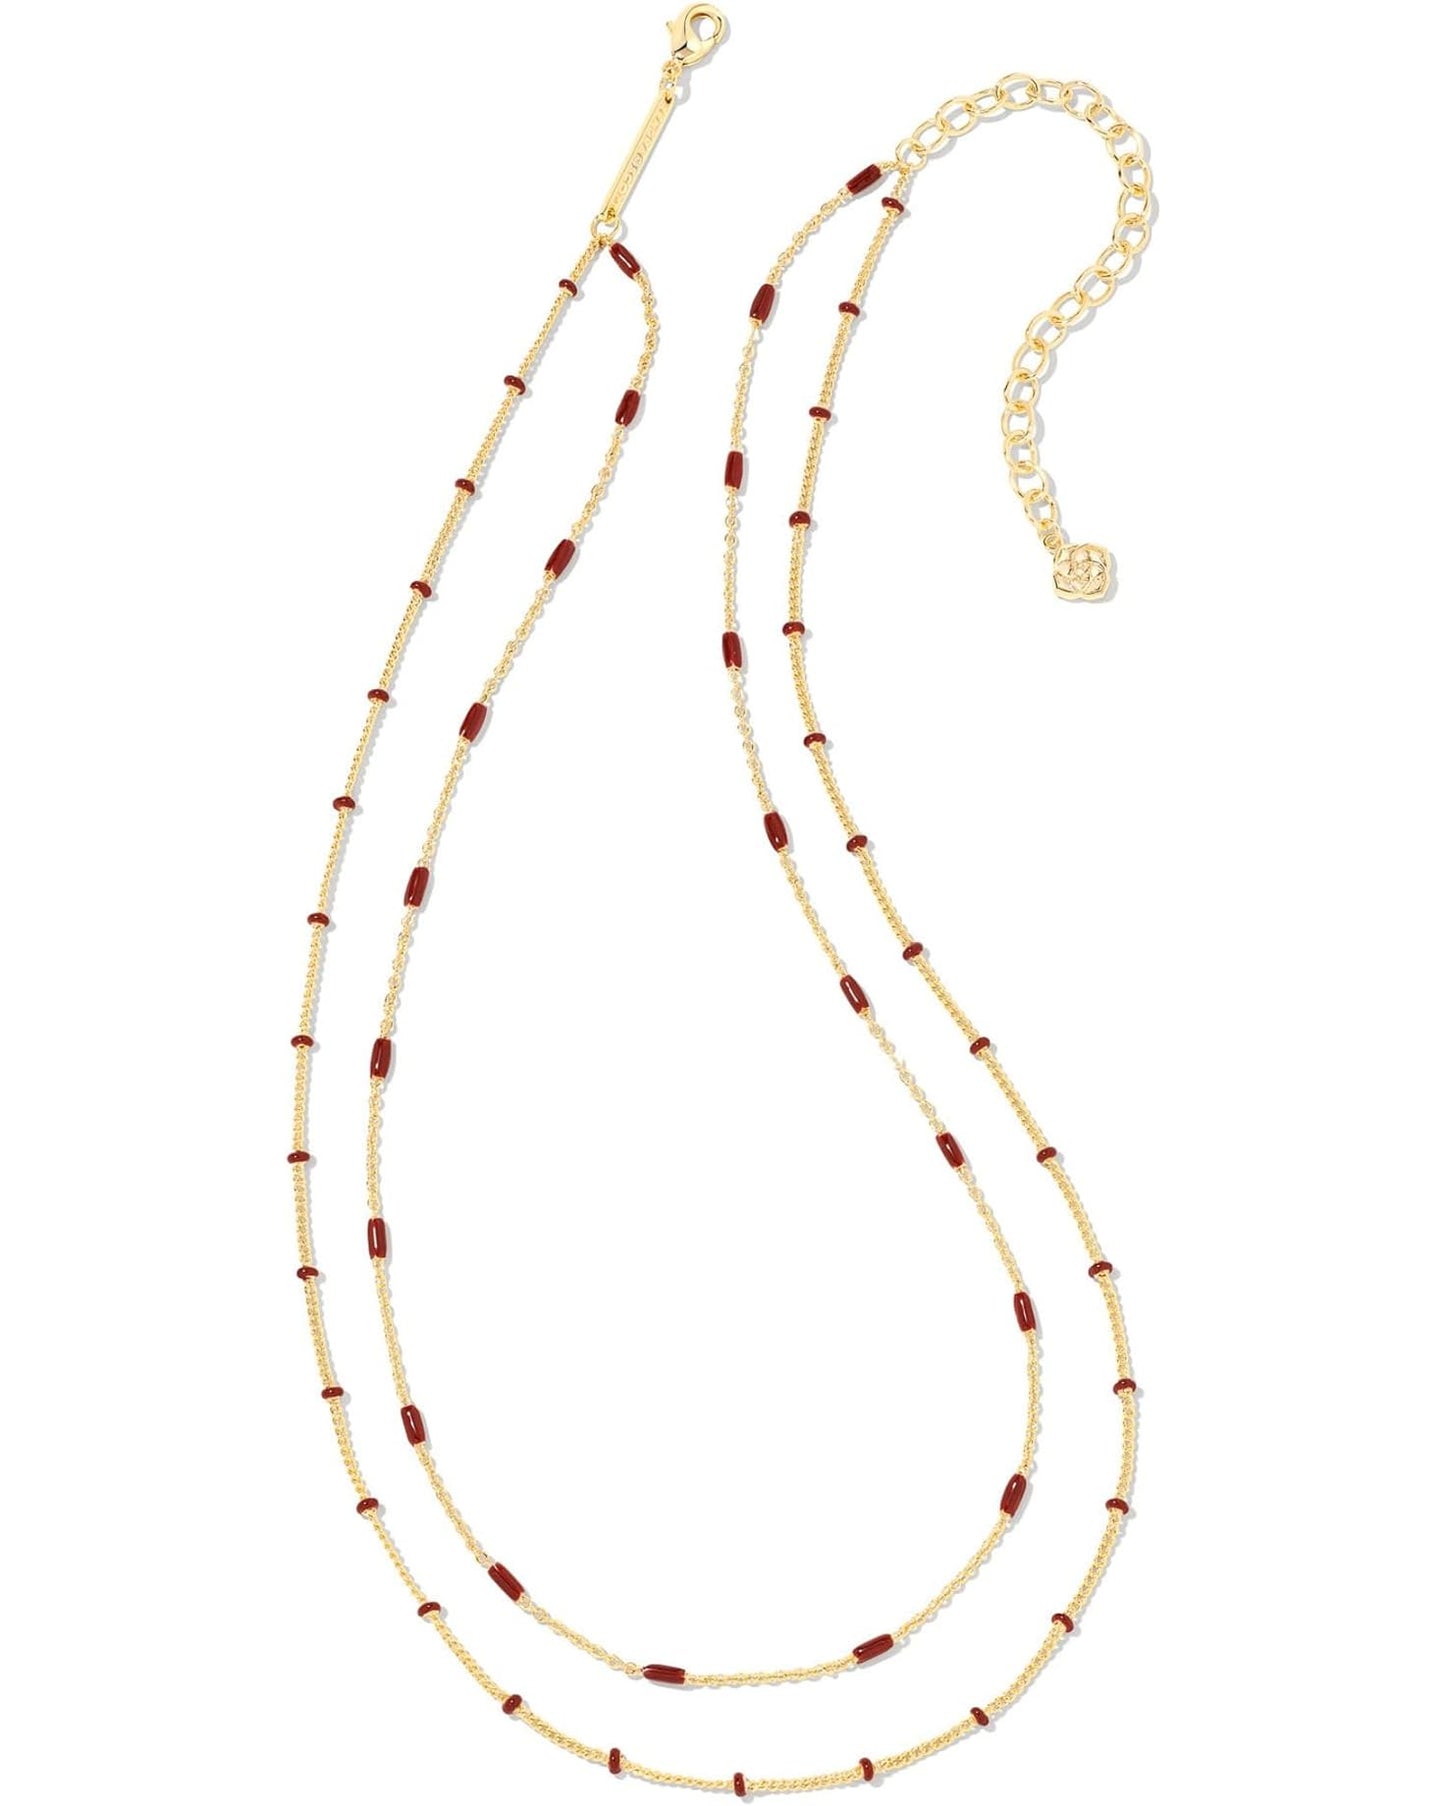 Dottie Gold Multistrand Necklace by Kendra Scott